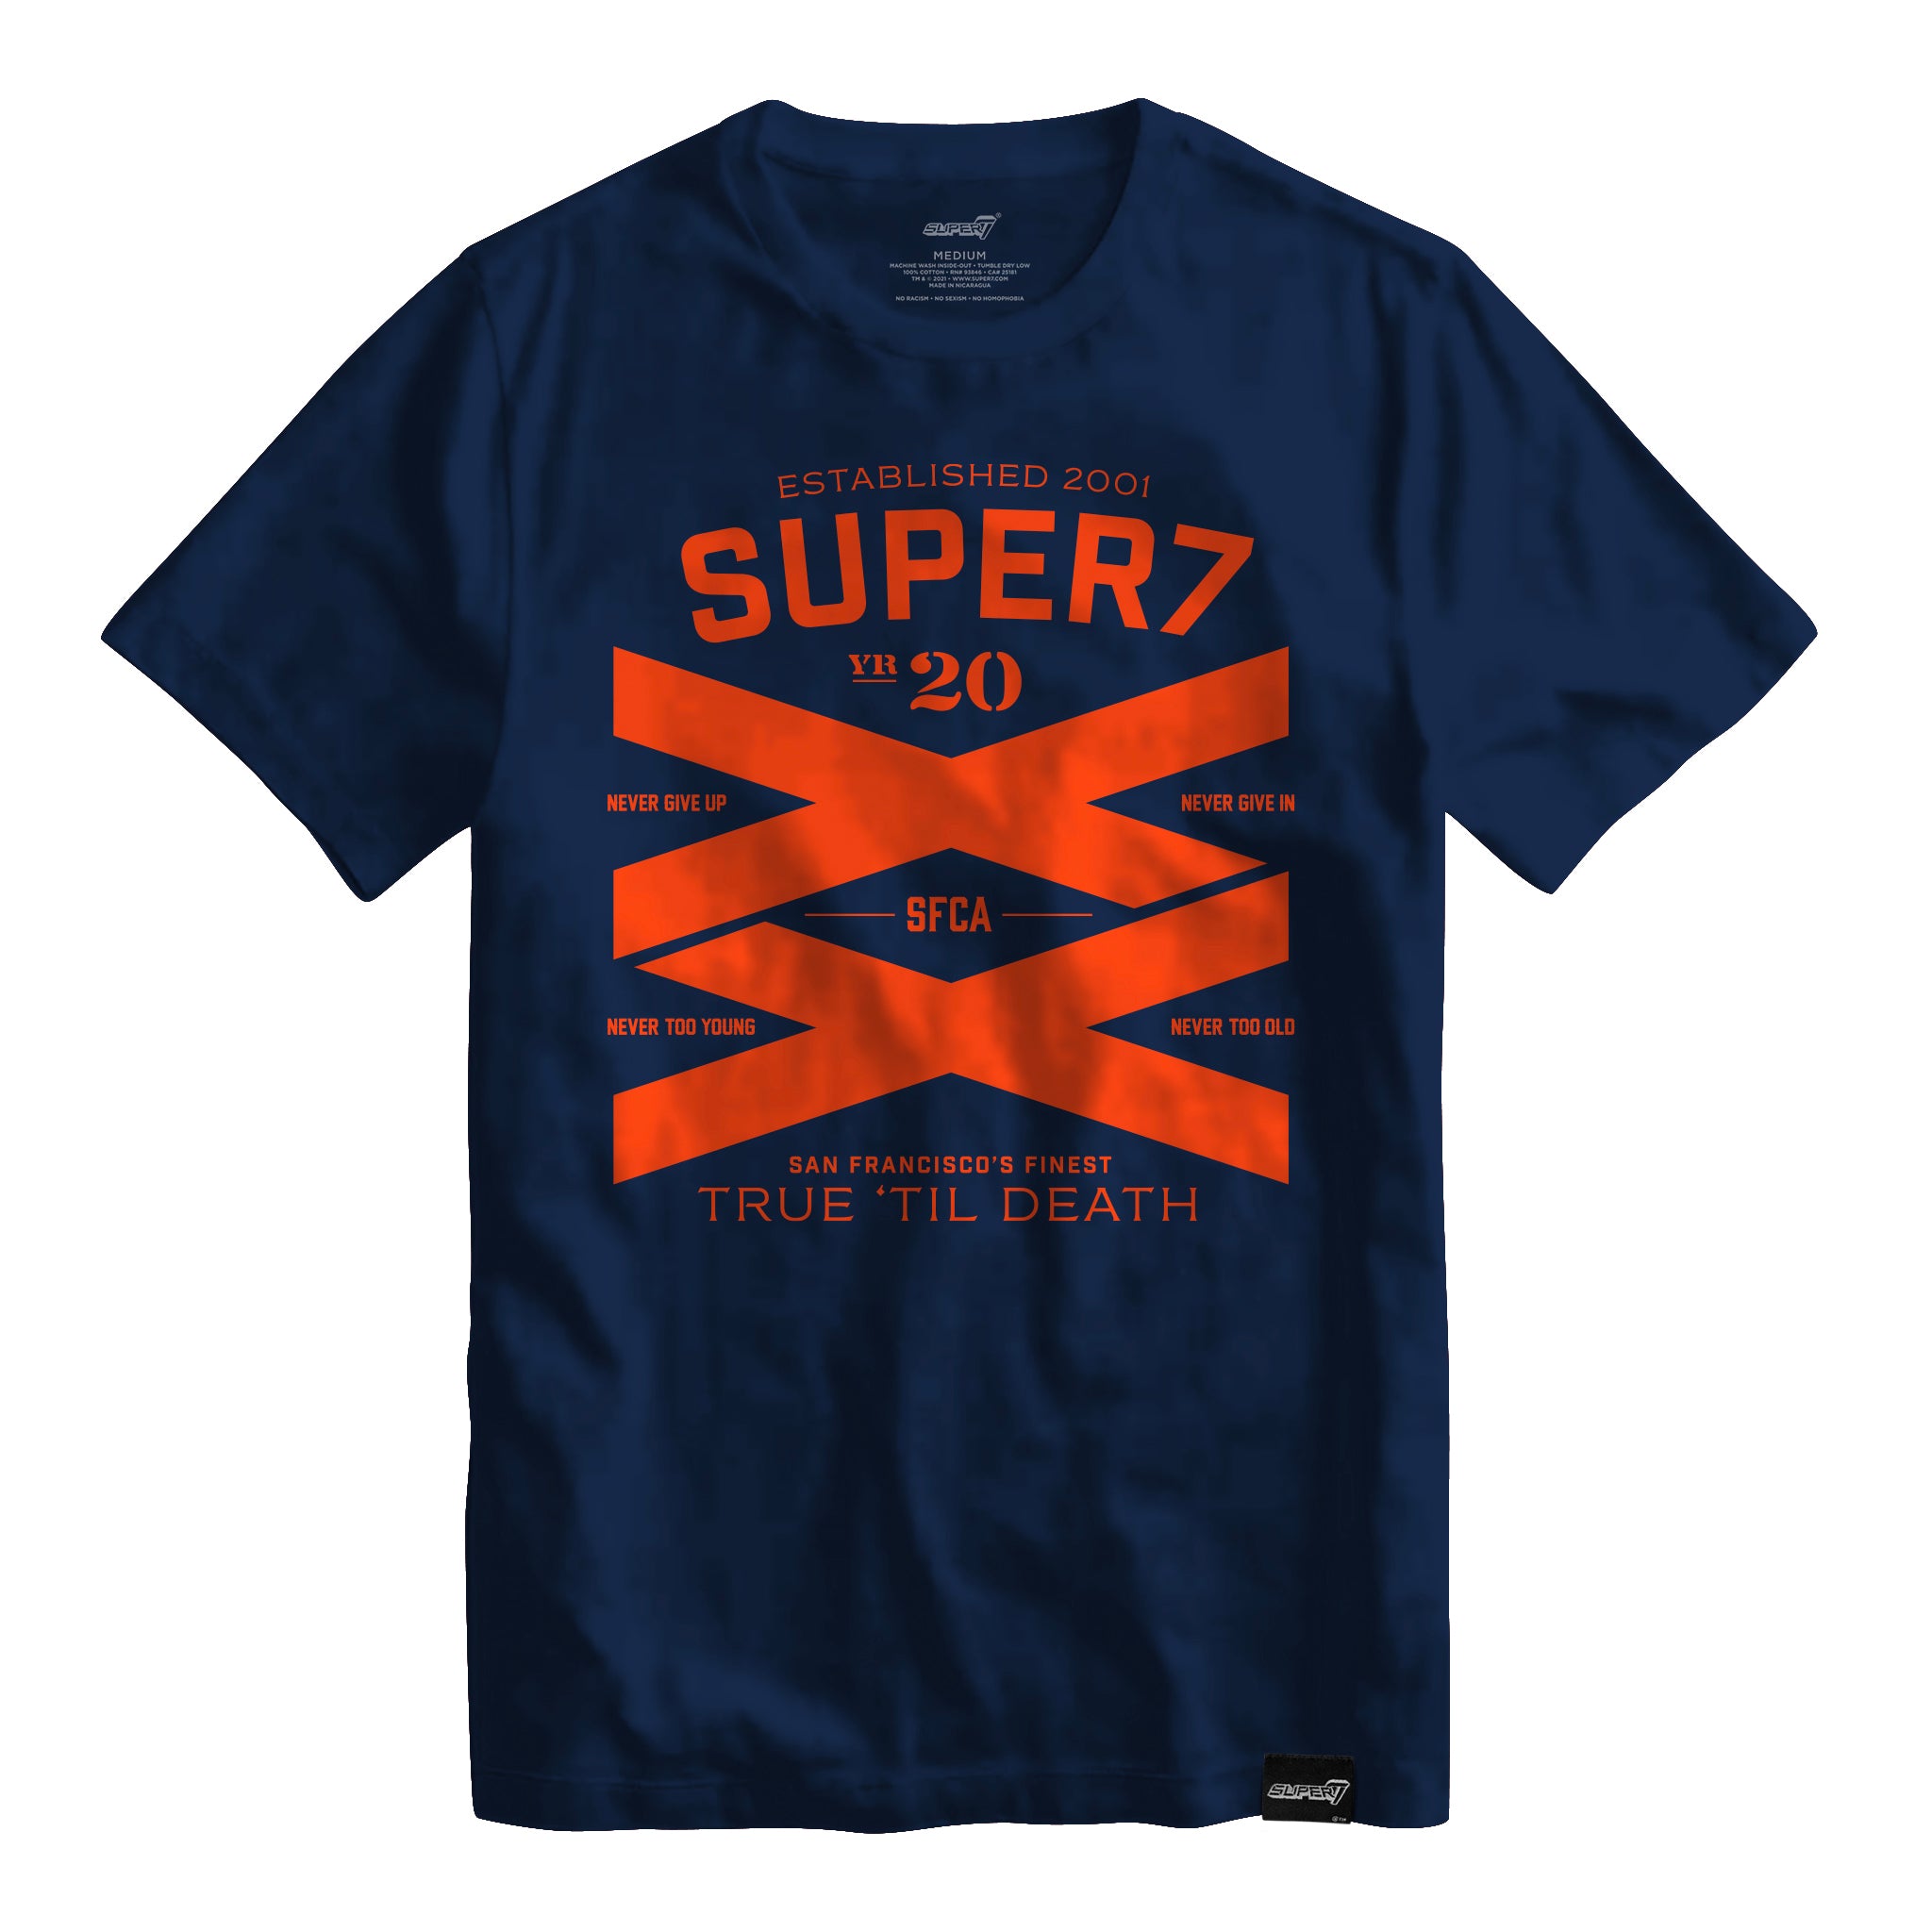 Super7 T-Shirt - 20th Anniversary